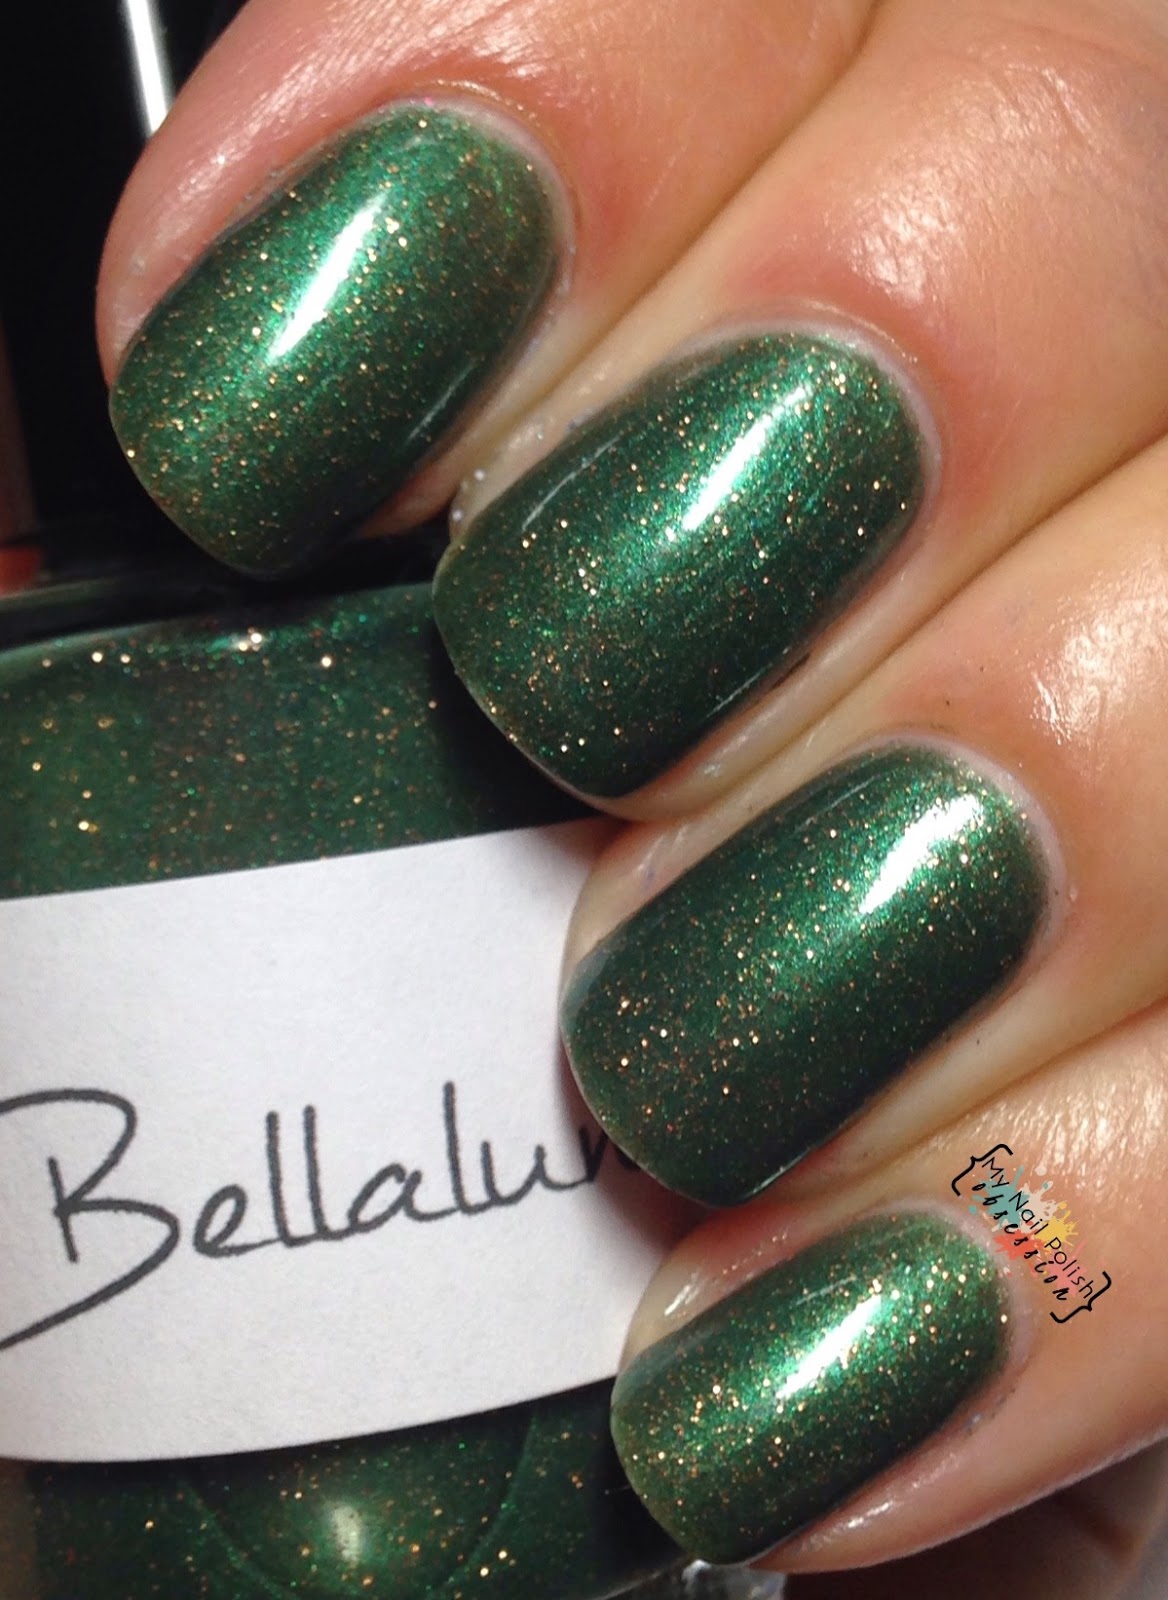 Bellaluna Cosmetics Belle of the Ball